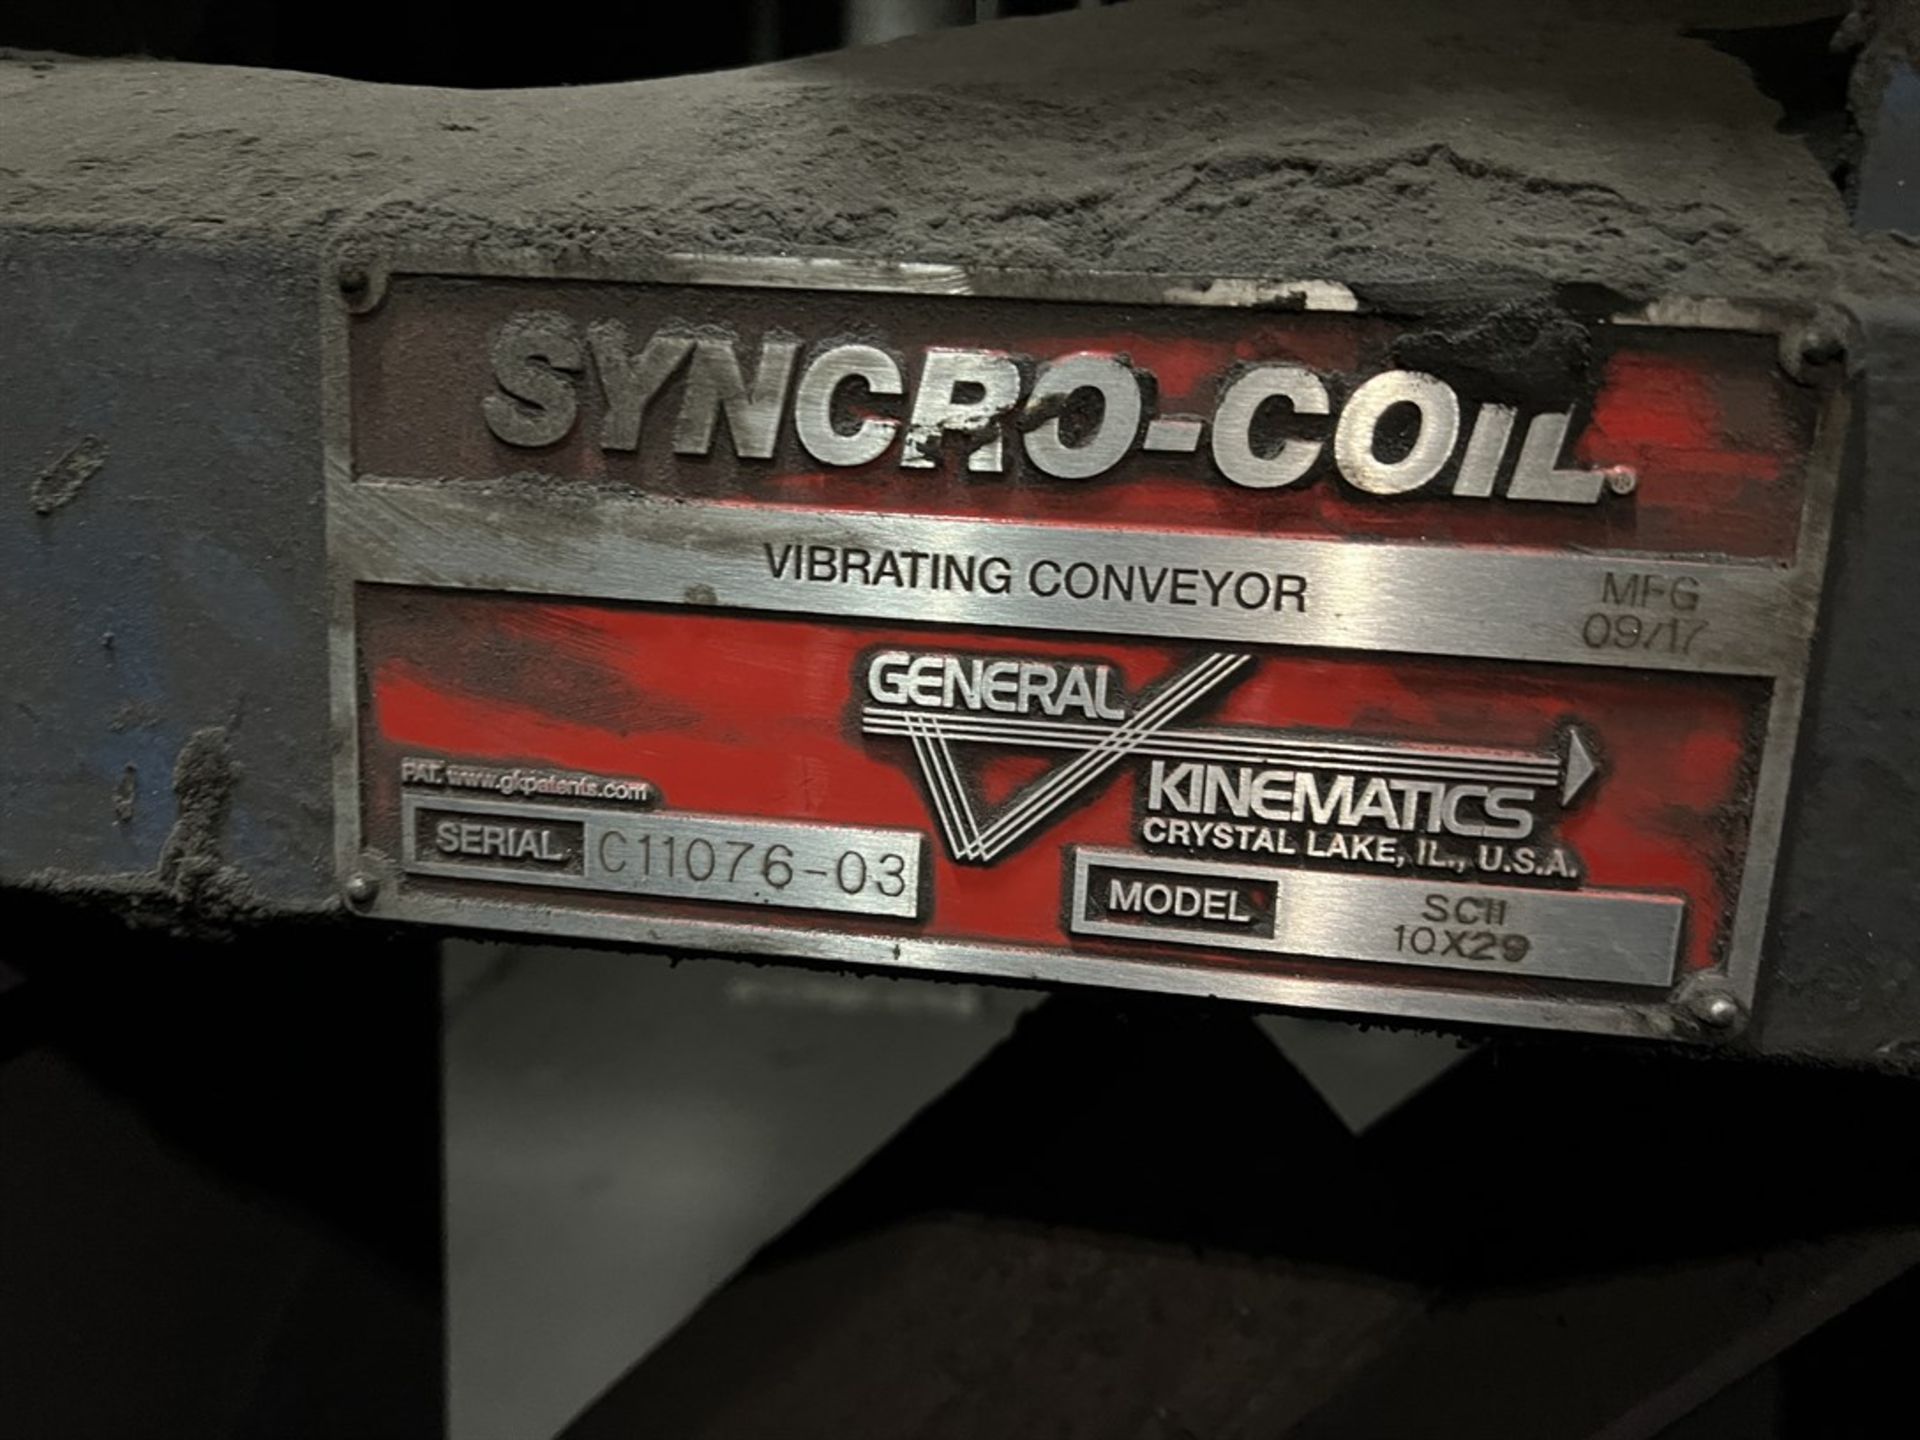 2017 GENERAL KINEMATICS Syncro-Coil SCM 10X29 Tube Shaker Vibrating Conveyor, s/n C11076-03 - Image 4 of 4